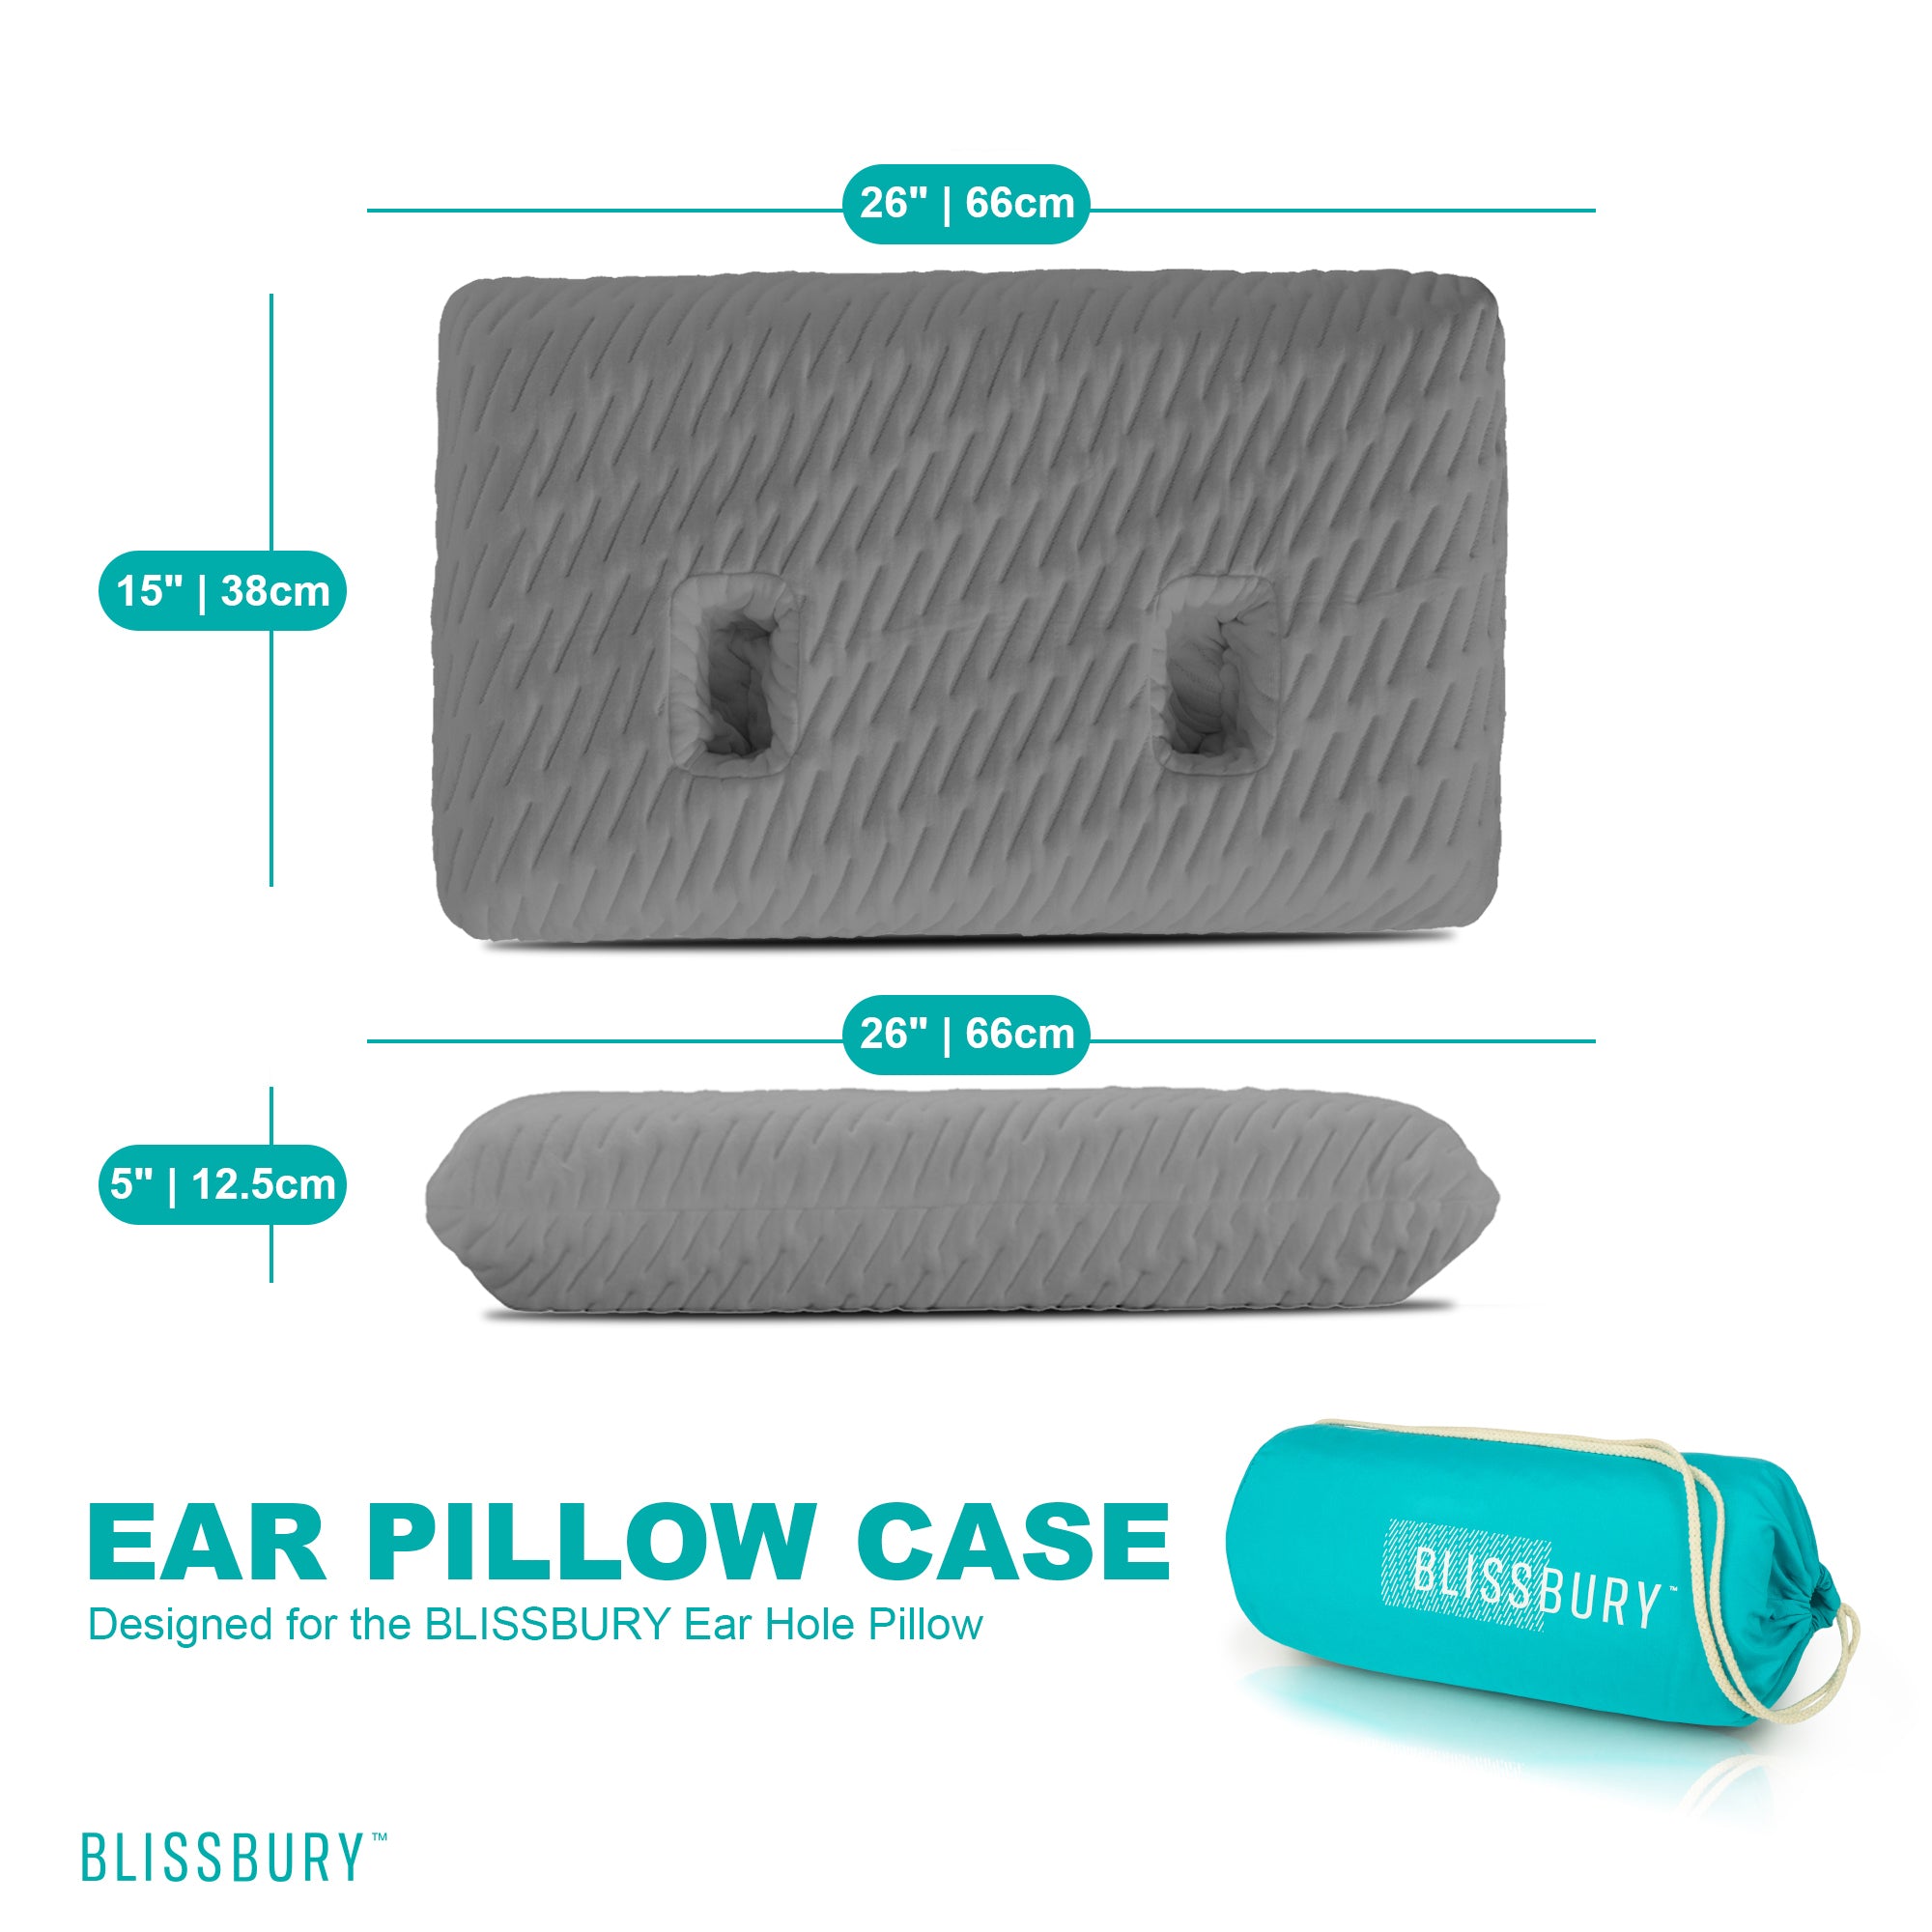 BLISSBURY Ear Pillow Case (Case Only)